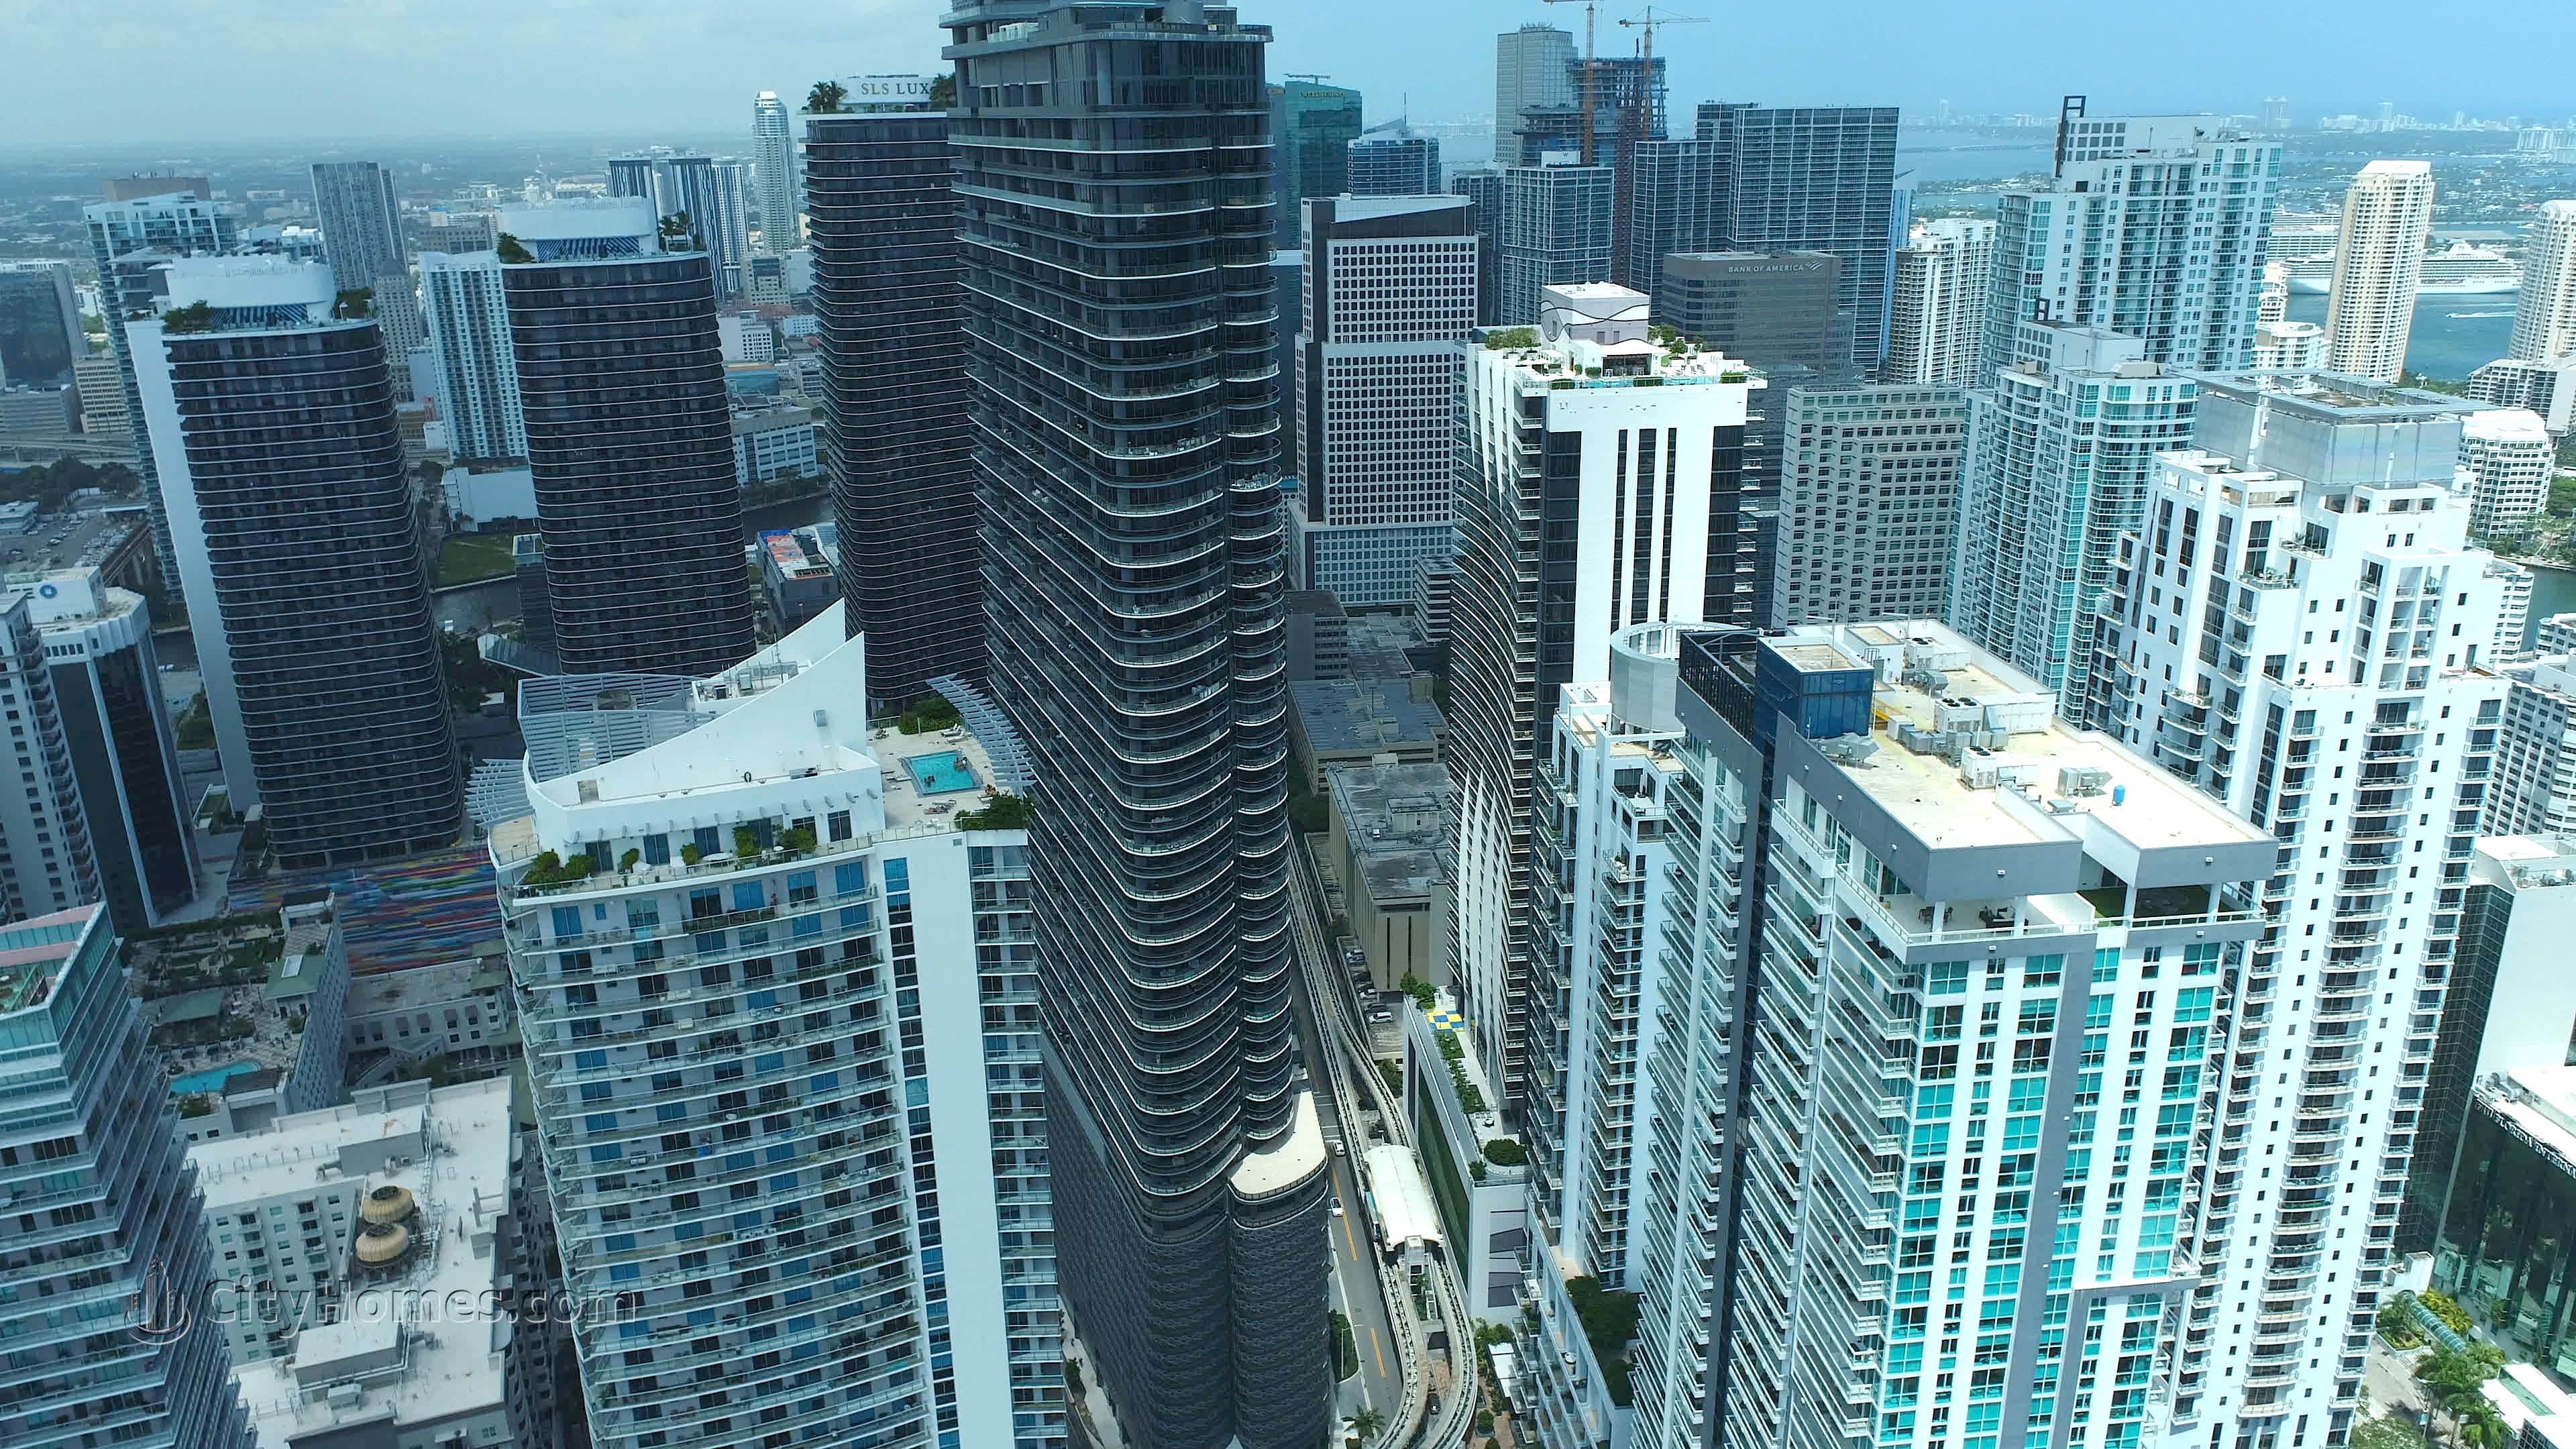 Brickell Flatiron building at 1000 Brickell Plaza, Brickell, Miami, FL 33130